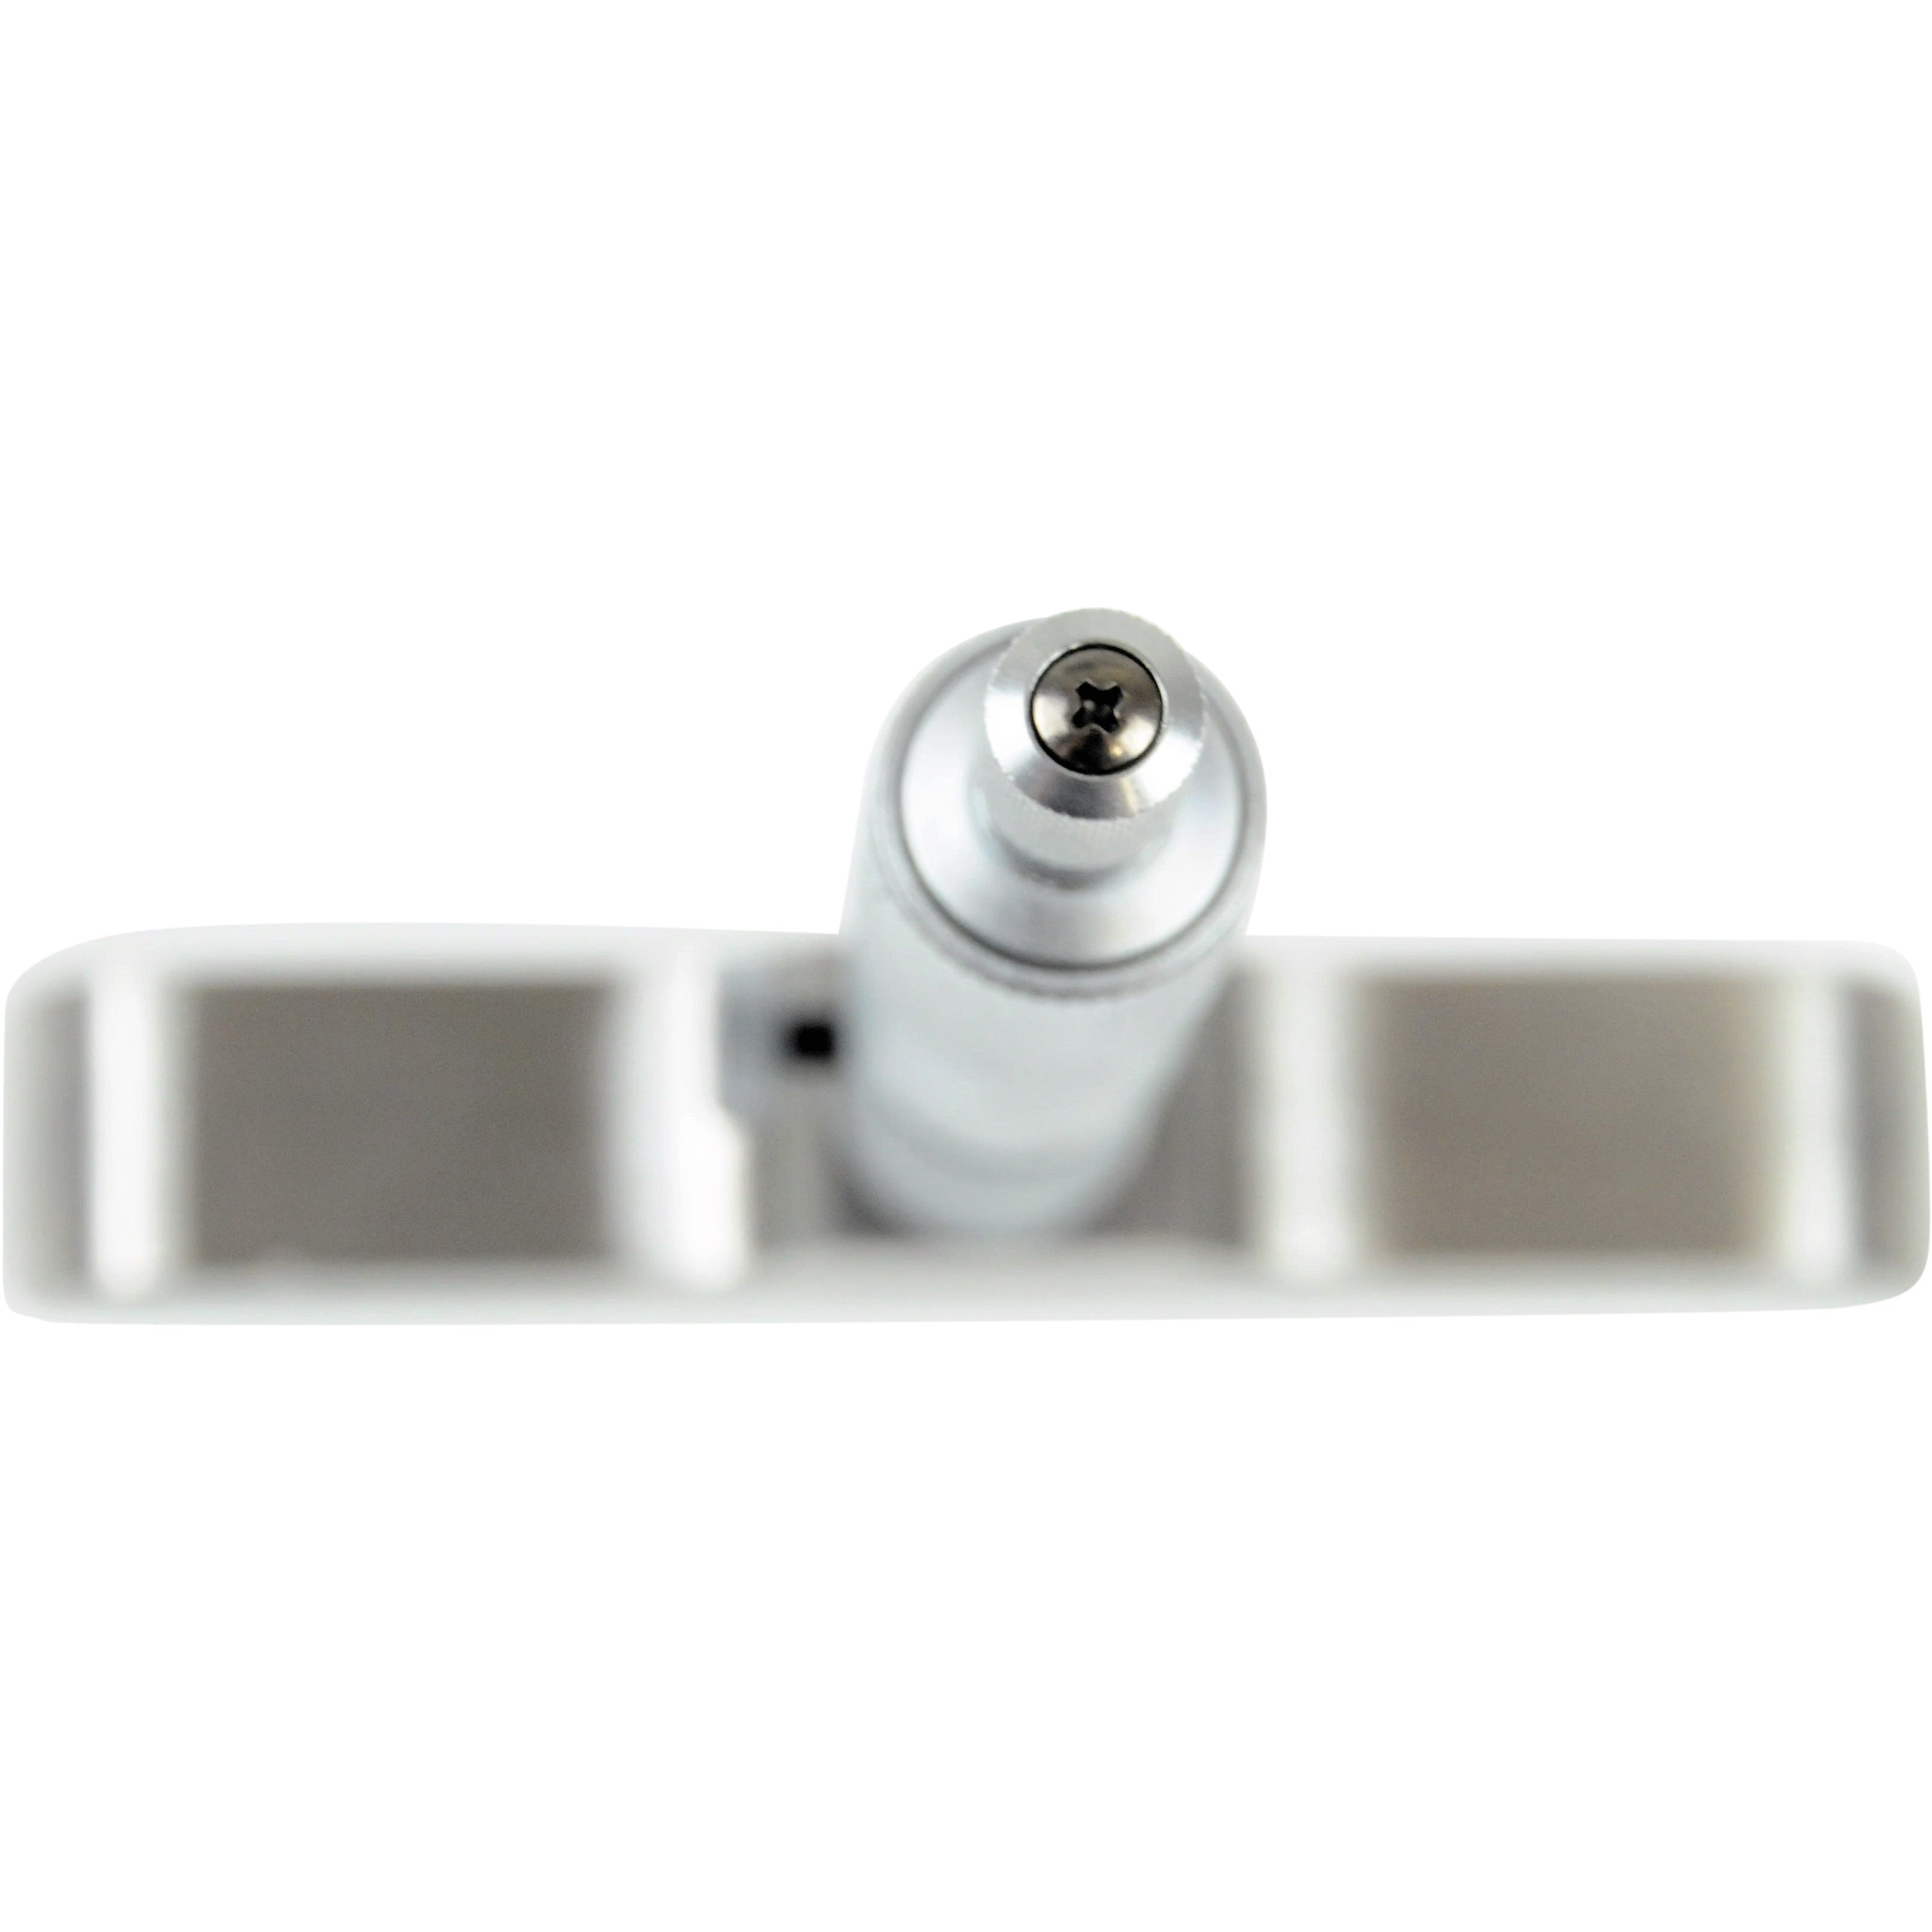 Insize Metric Depth Micrometer 0-300mm Range Series 3240 - 300